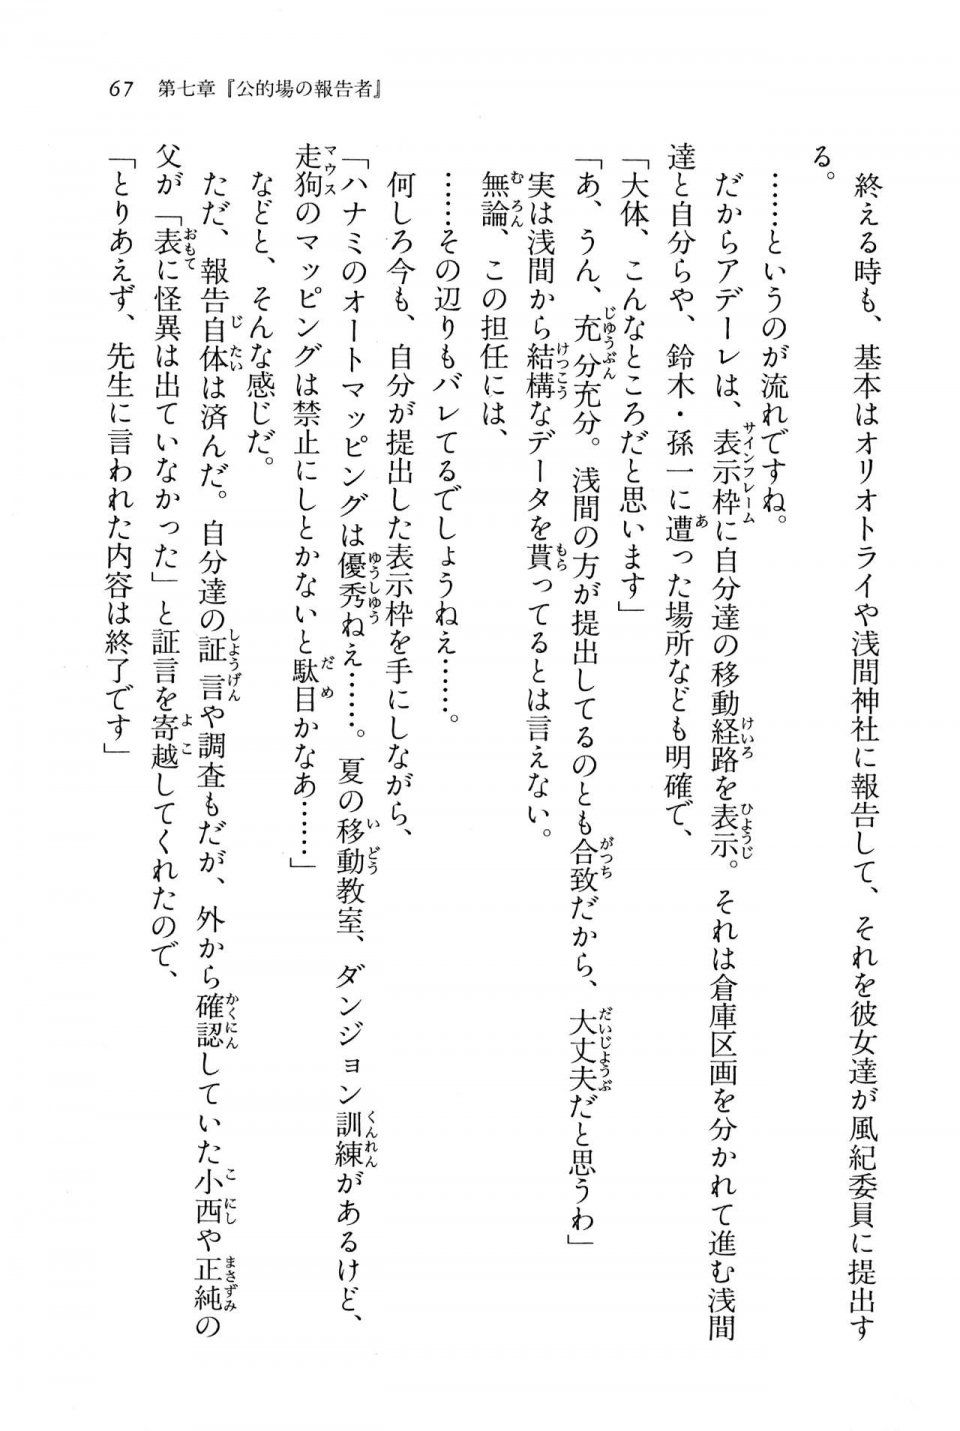 Kyoukai Senjou no Horizon BD Special Mininovel Vol 6(3B) - Photo #71